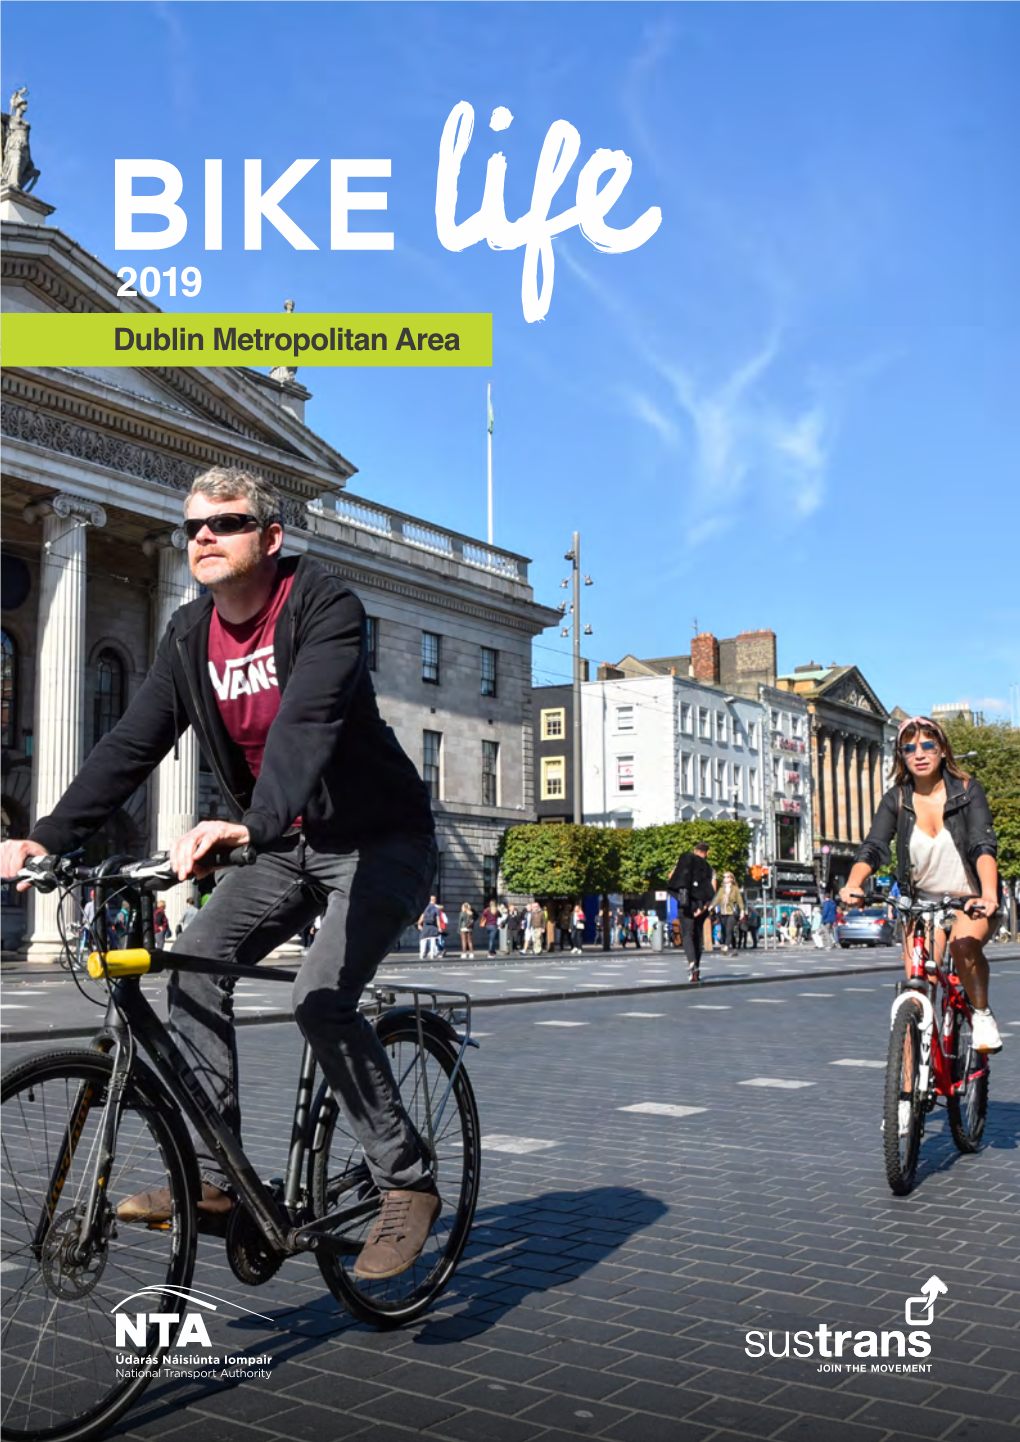 Dublin Metropolitan Area Making Tracks Our Vision for Cycling in the Dublin Metropolitan Area